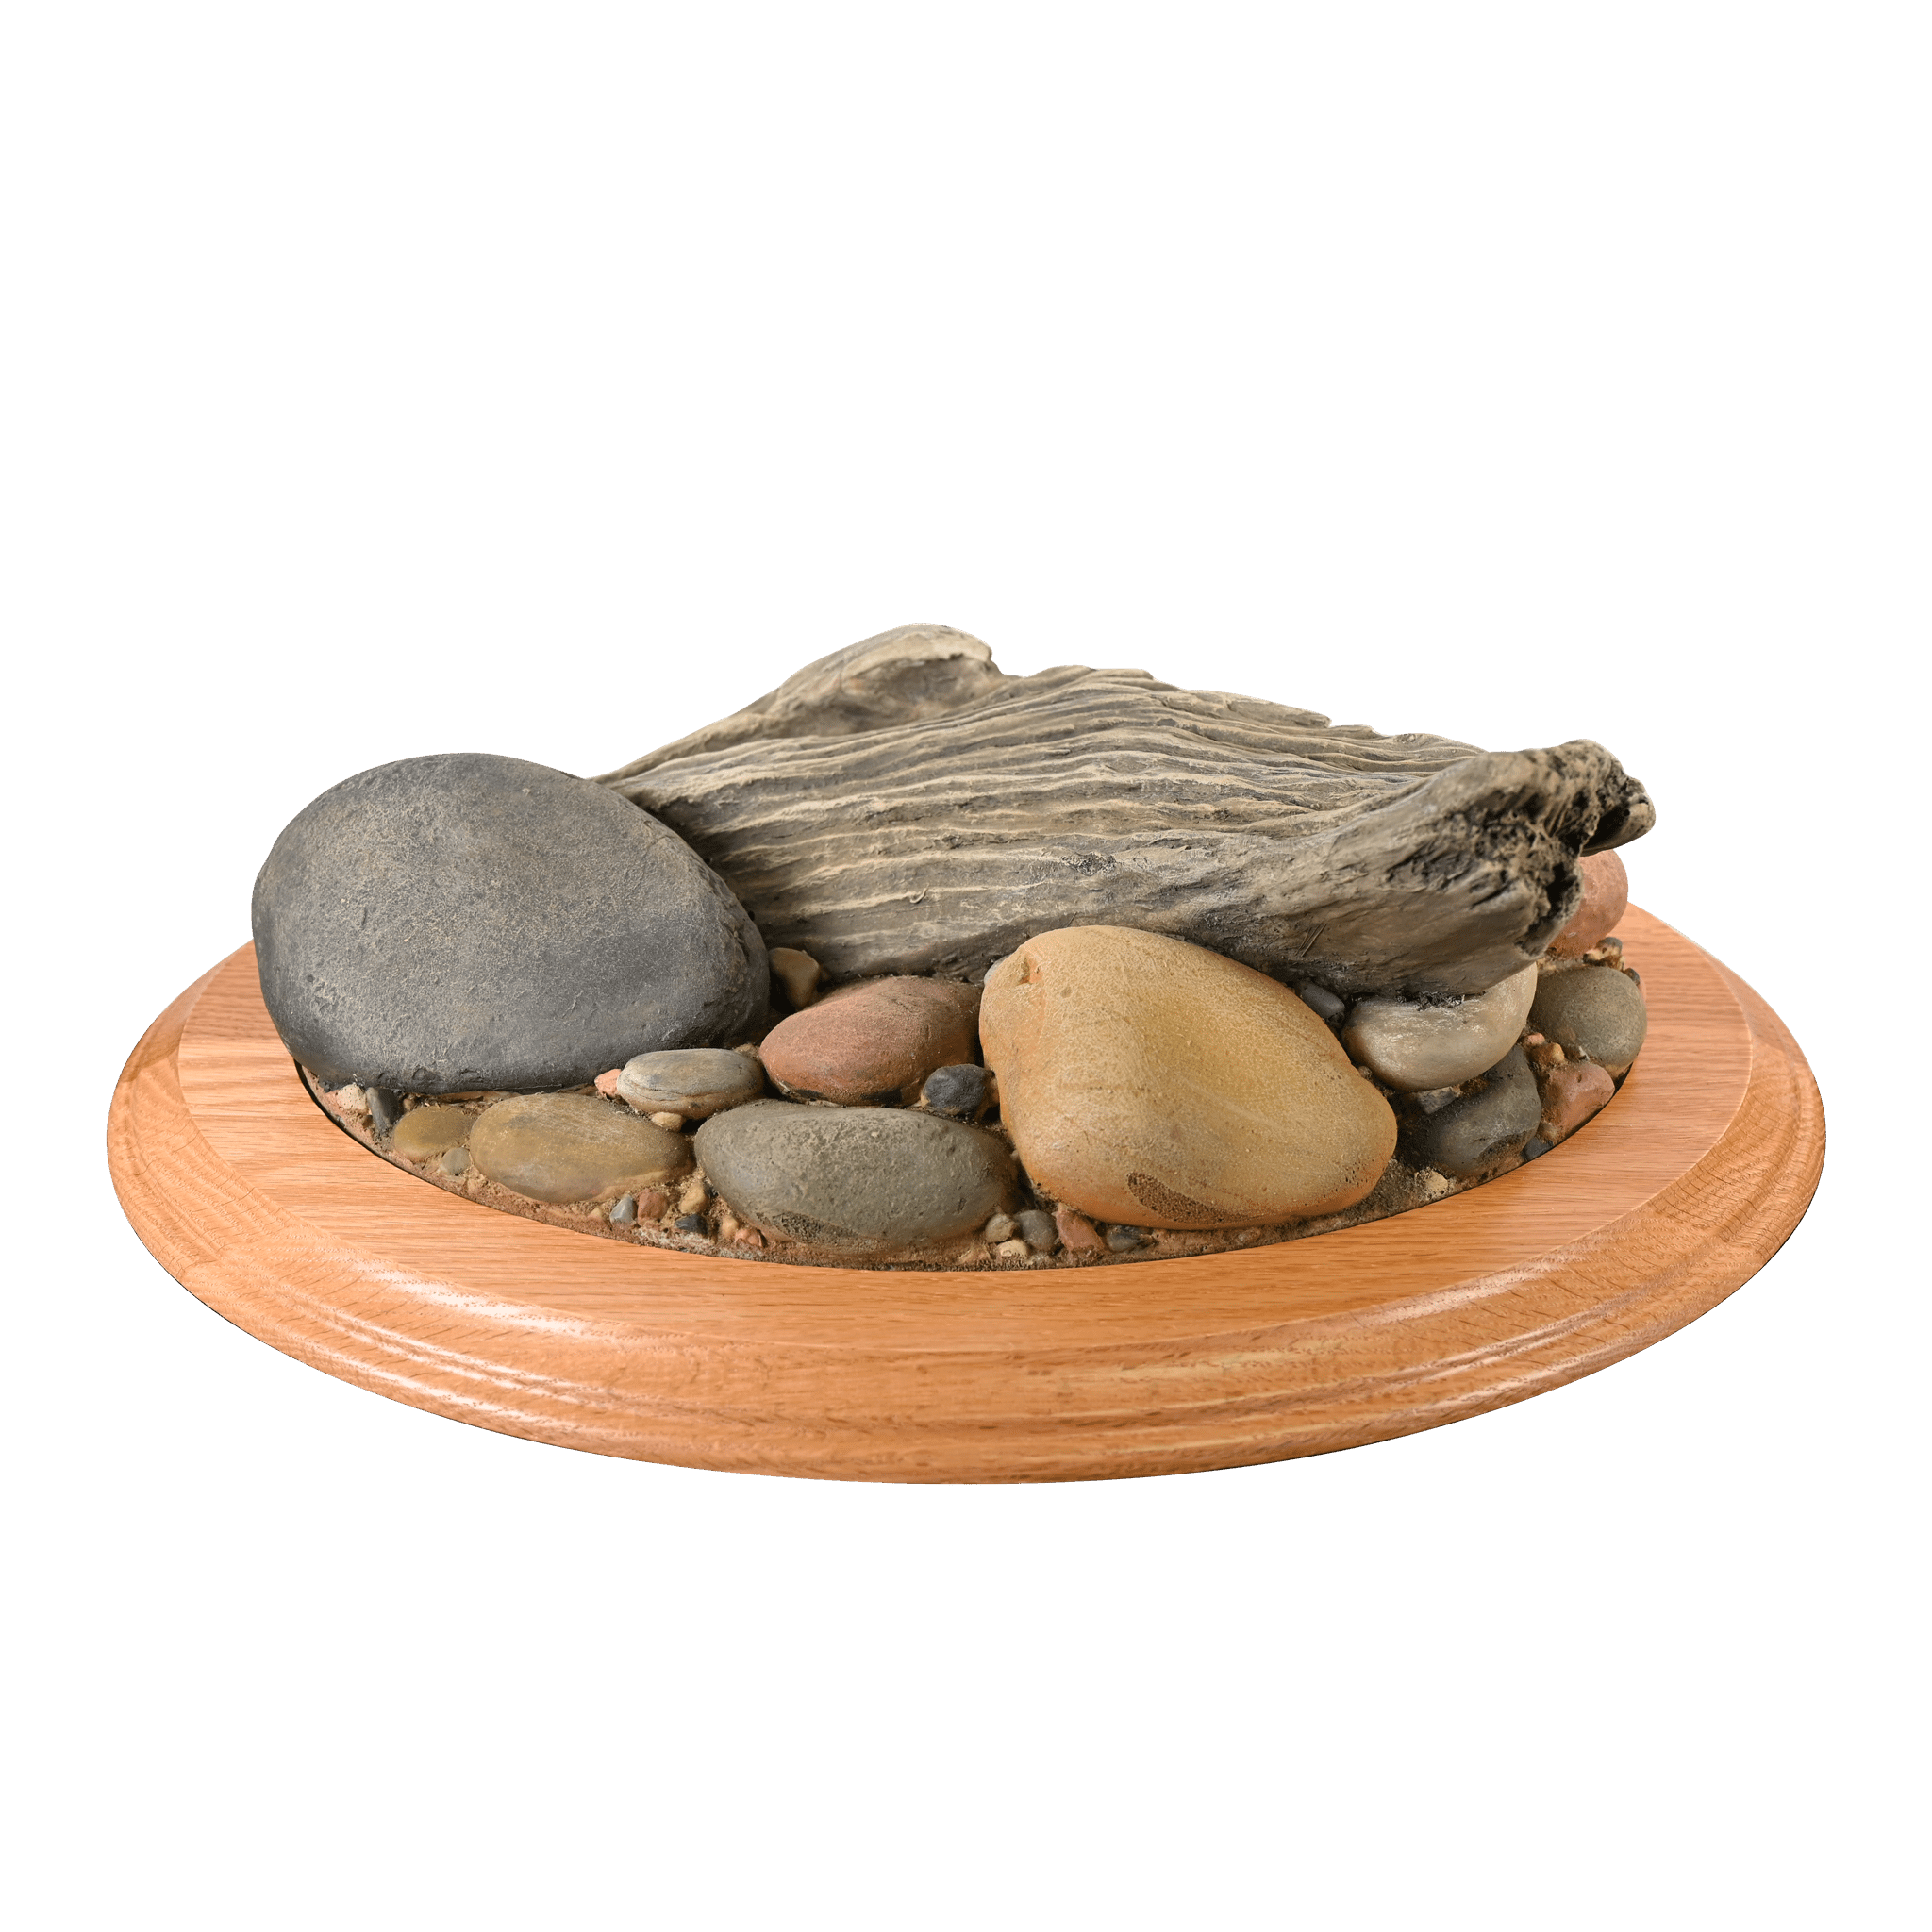 Rock/Driftwood Base (Large Oval) - Matuska Taxidermy Supply Company